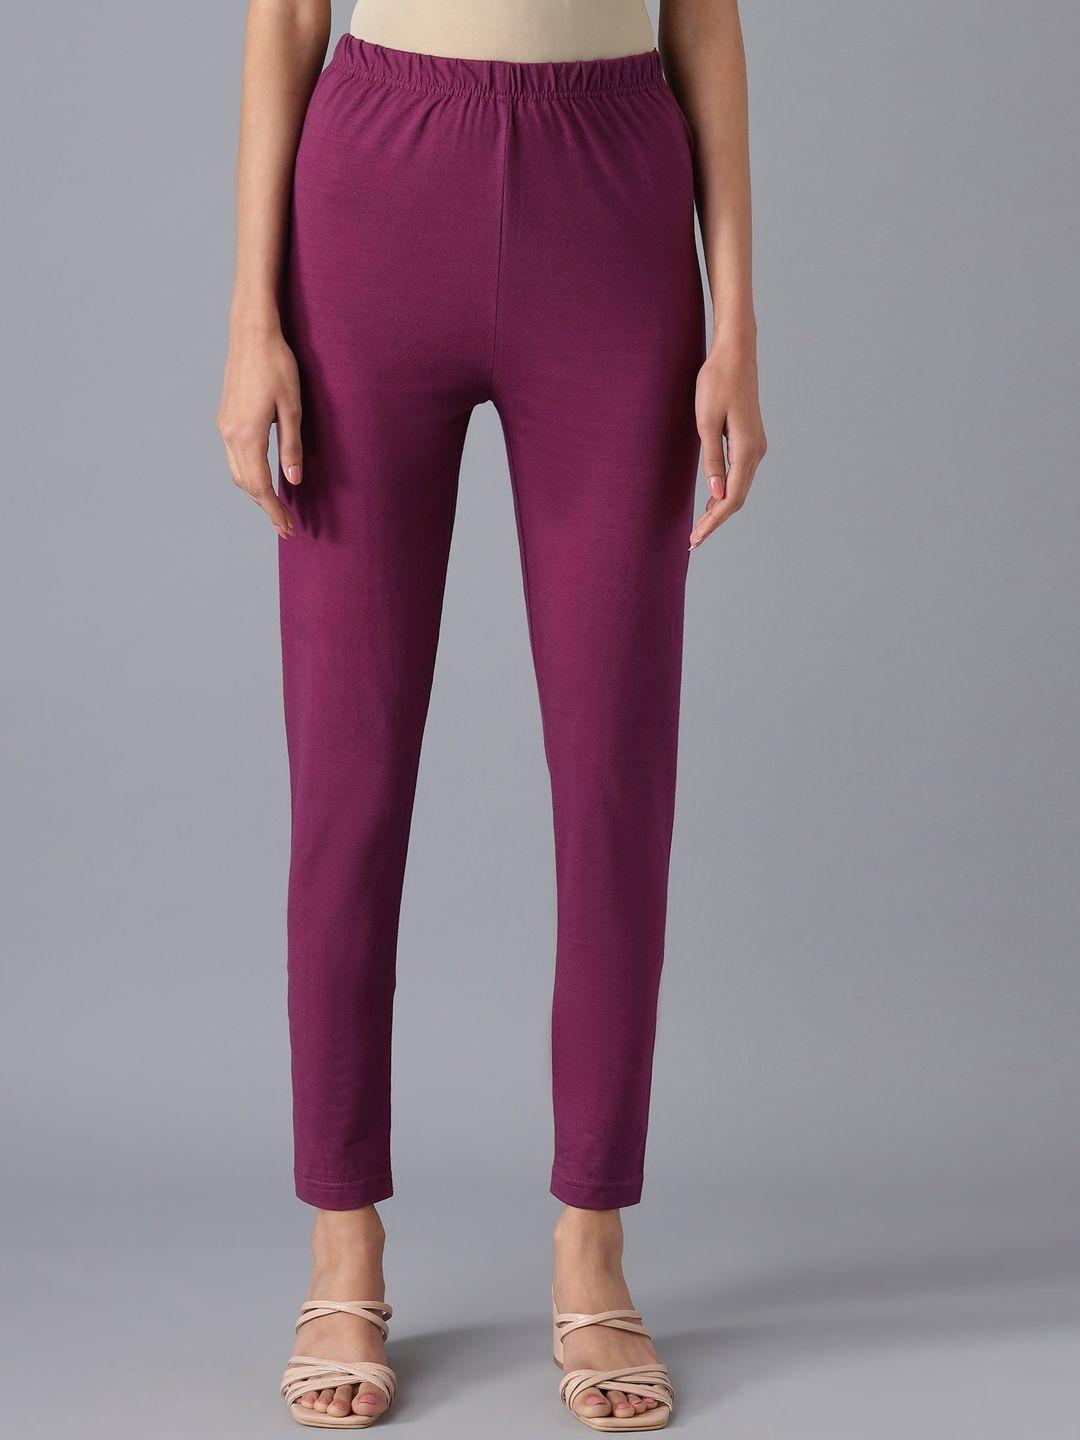 aurelia-women-purple-solid-skinny-fit-ankle-length-leggings